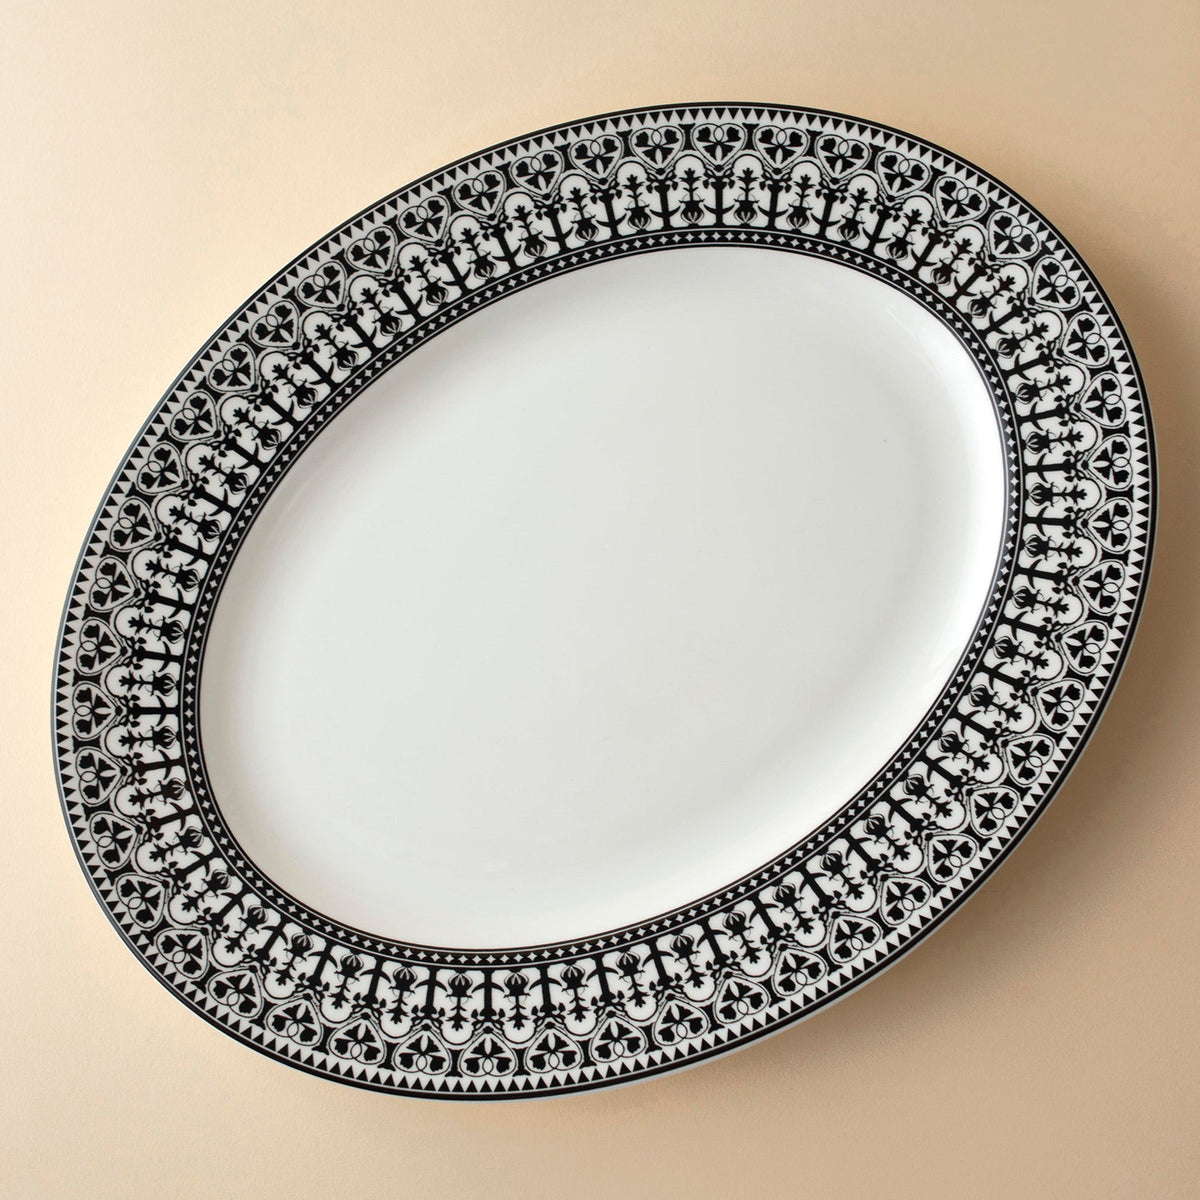 A Casablanca Black Large Oval Rimmed Platter by Caskata Artisanal Home on a neutral surface.